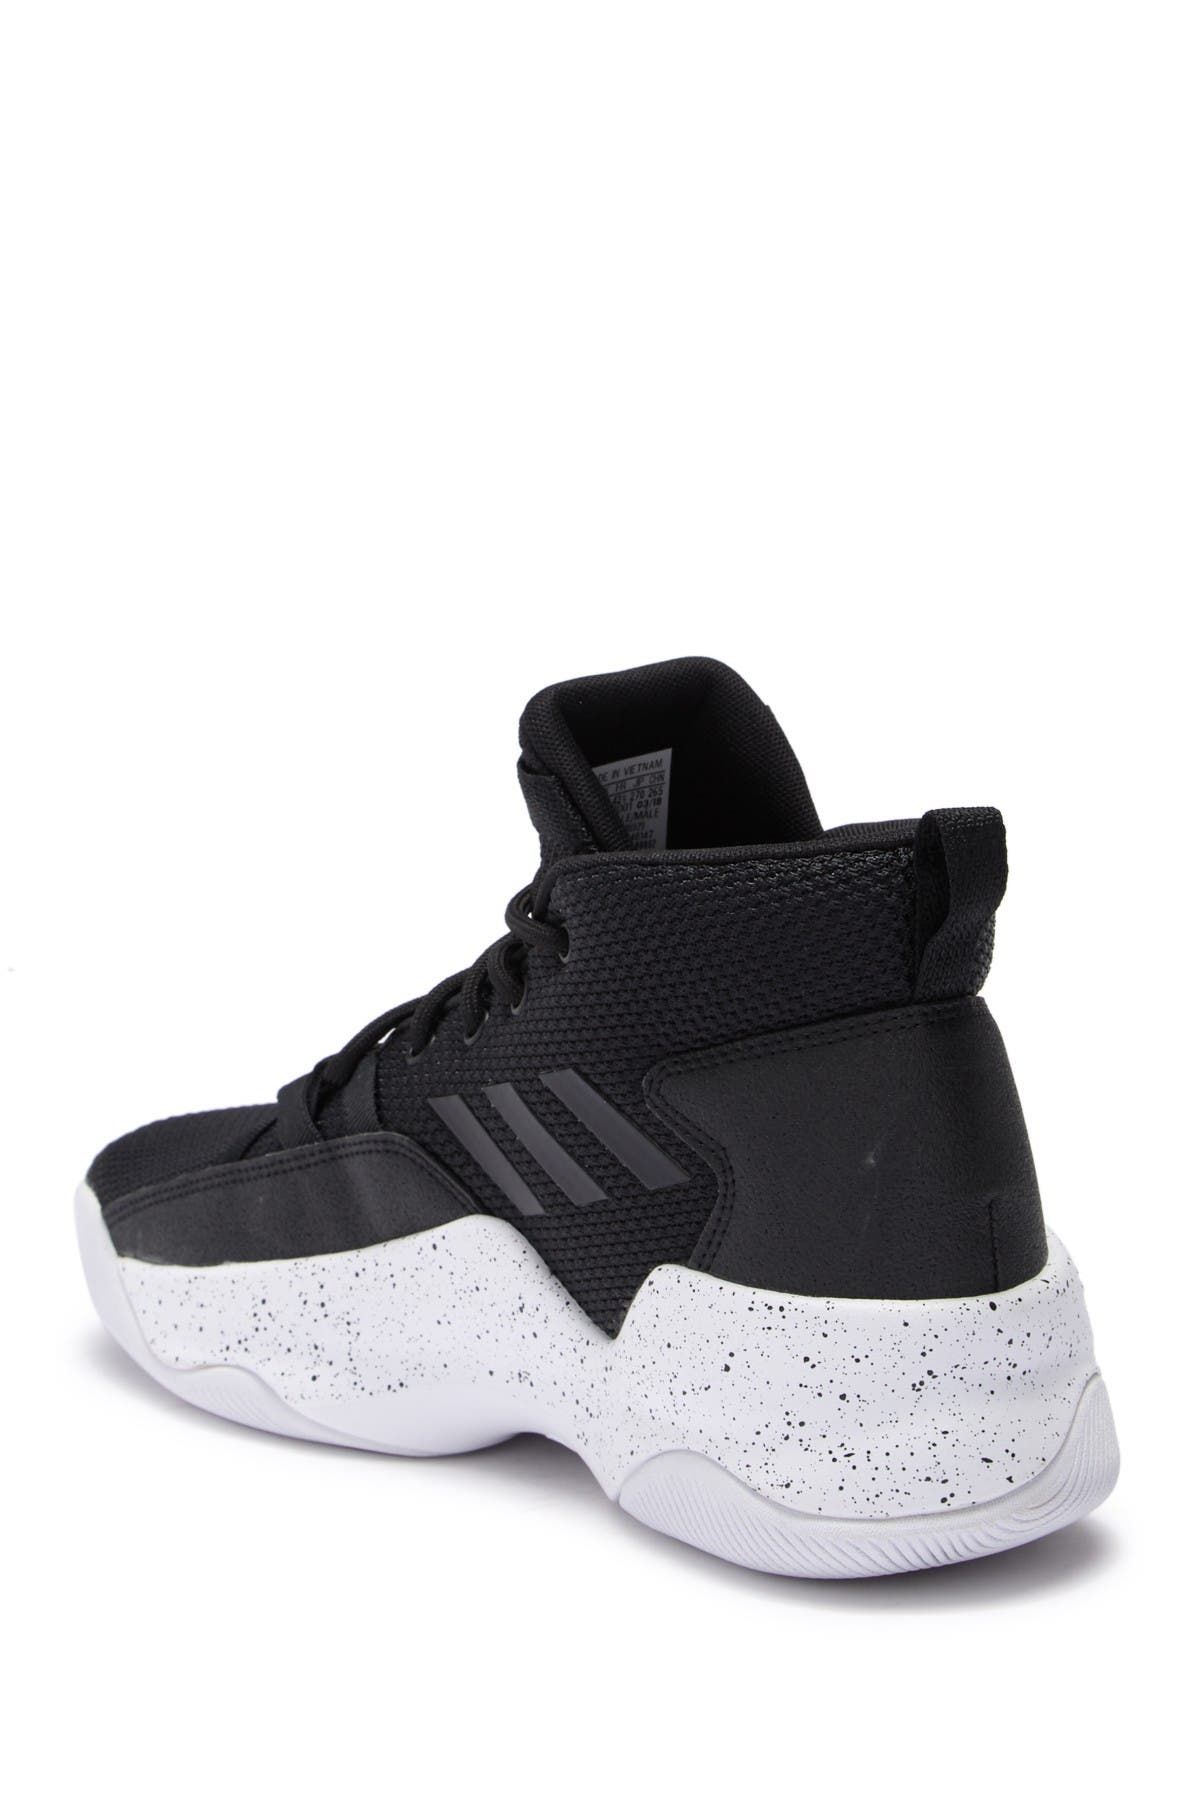 adidas cloudfoam streetfire men's basketball shoes